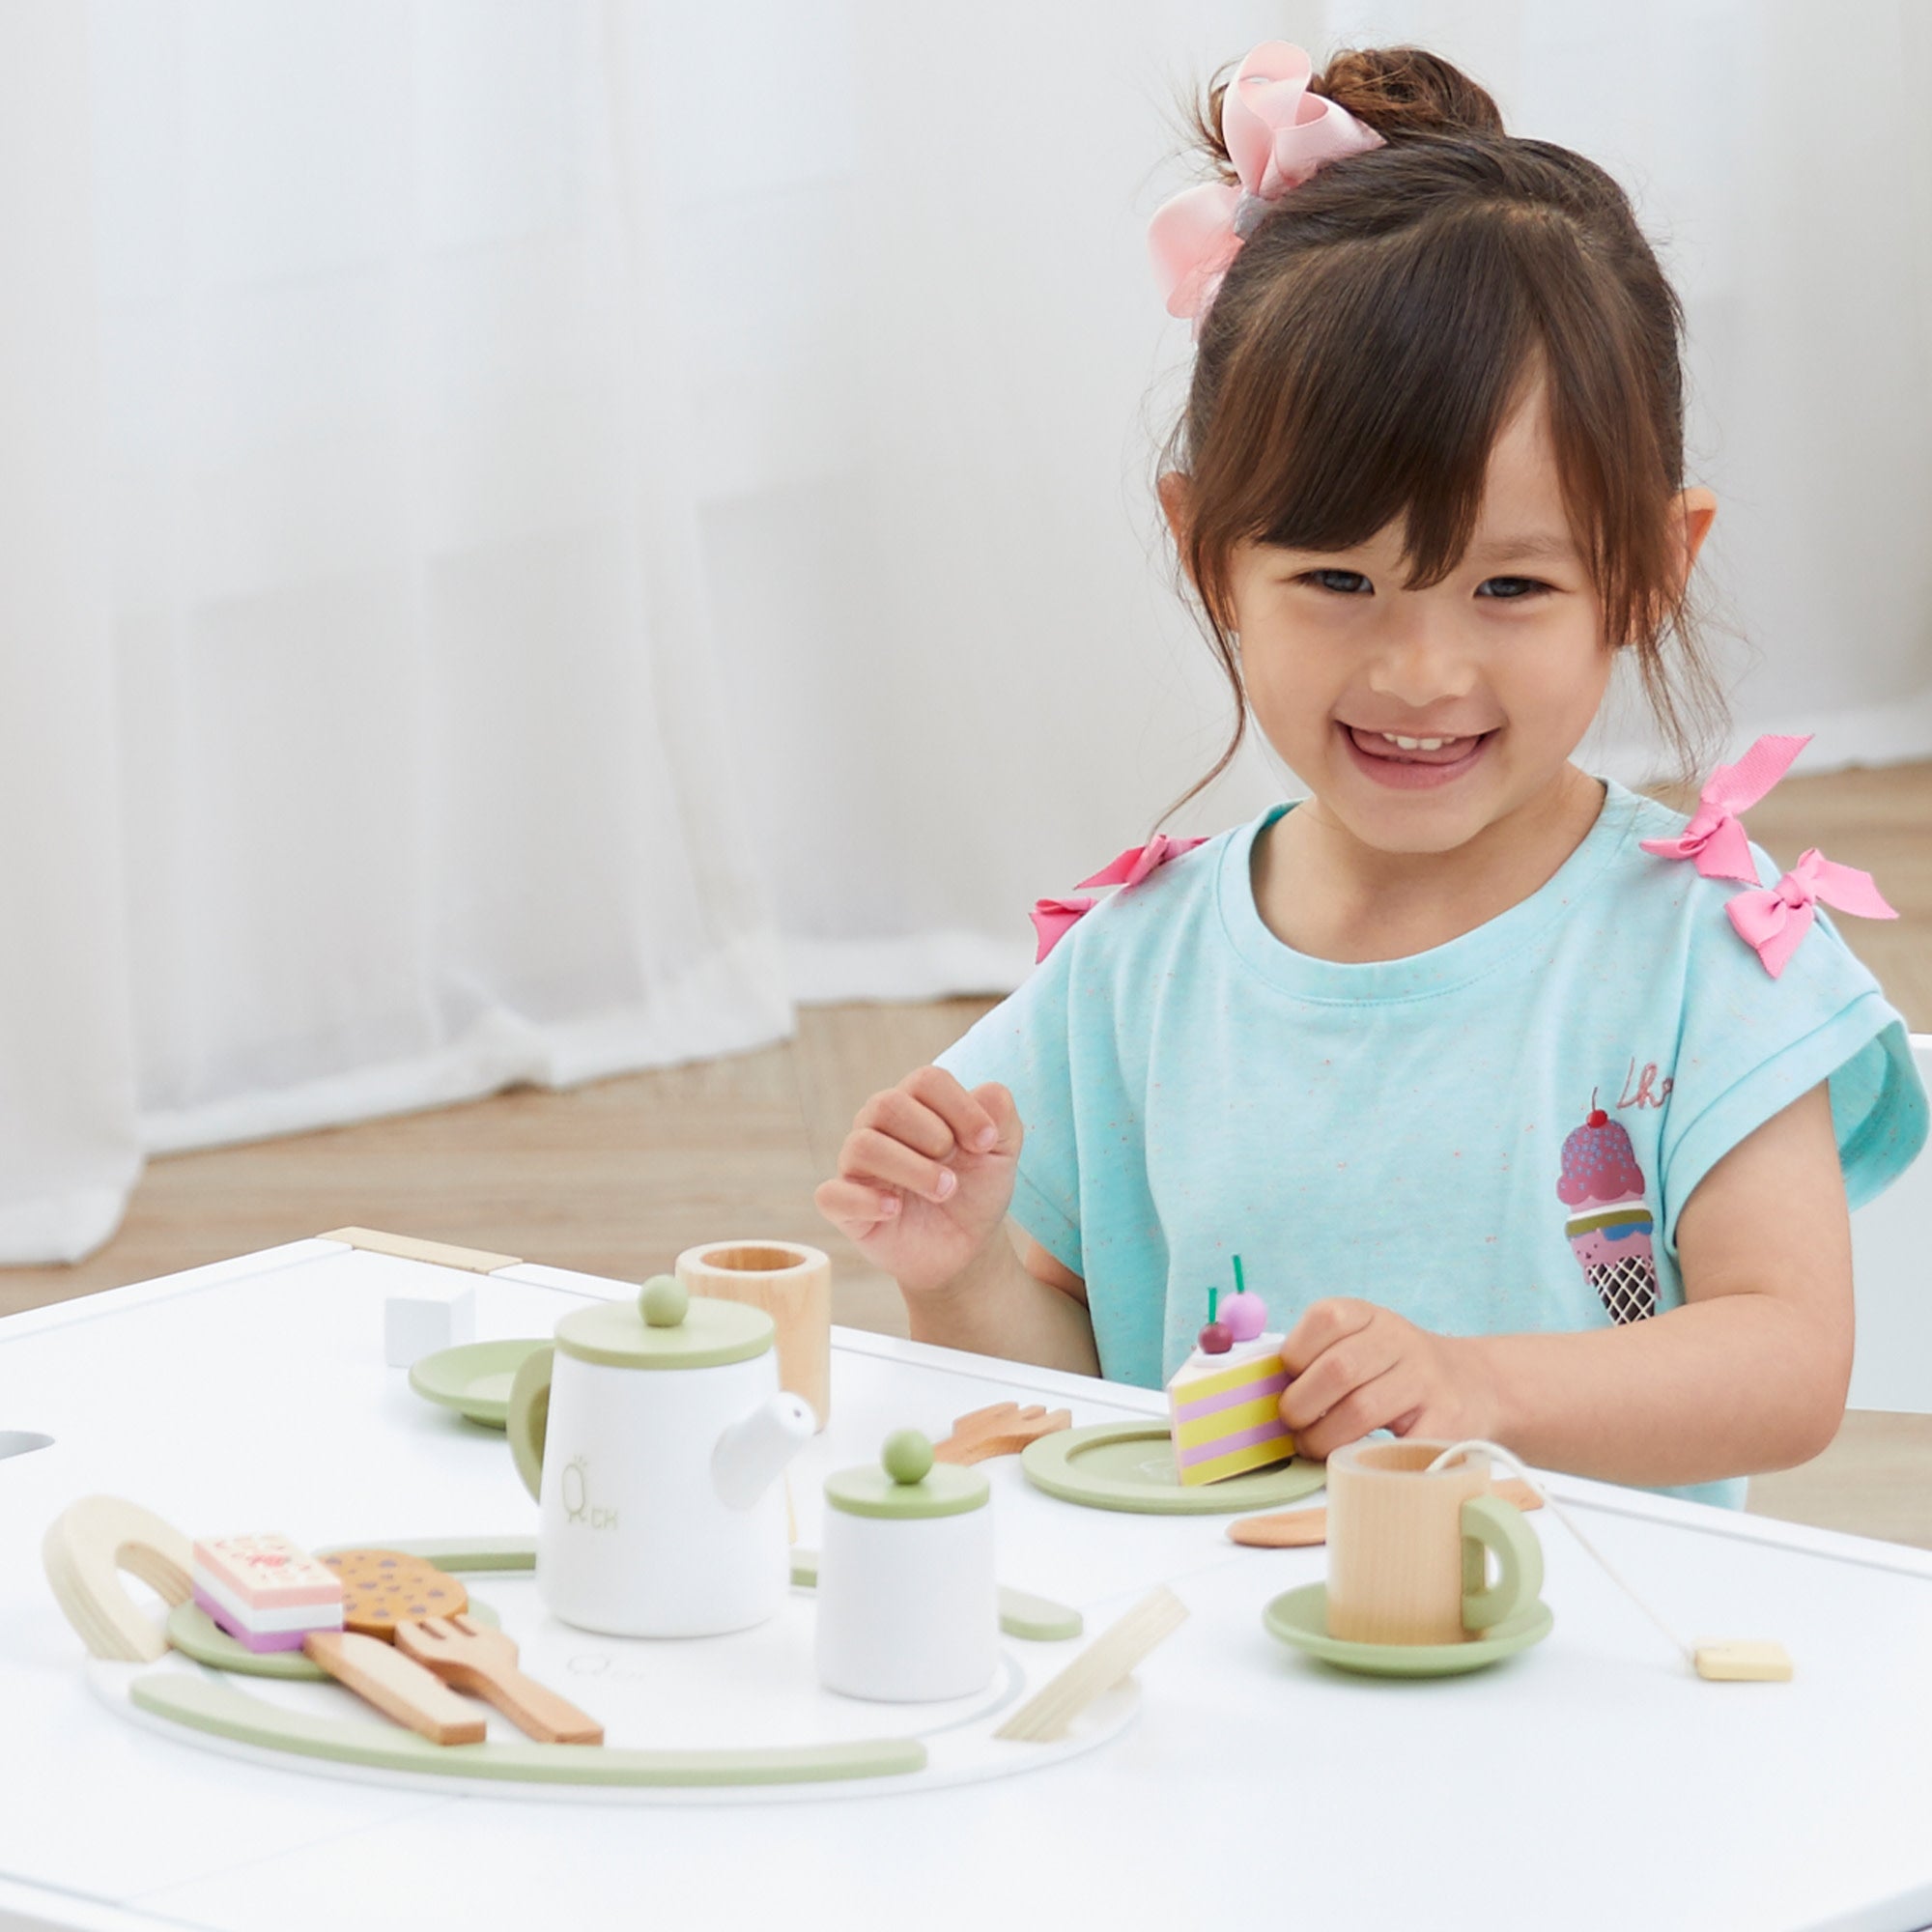 Teamson Kids - Little Chef Frankfurt Wooden Tea sets play kitchen accessories - Green- 20 pcs